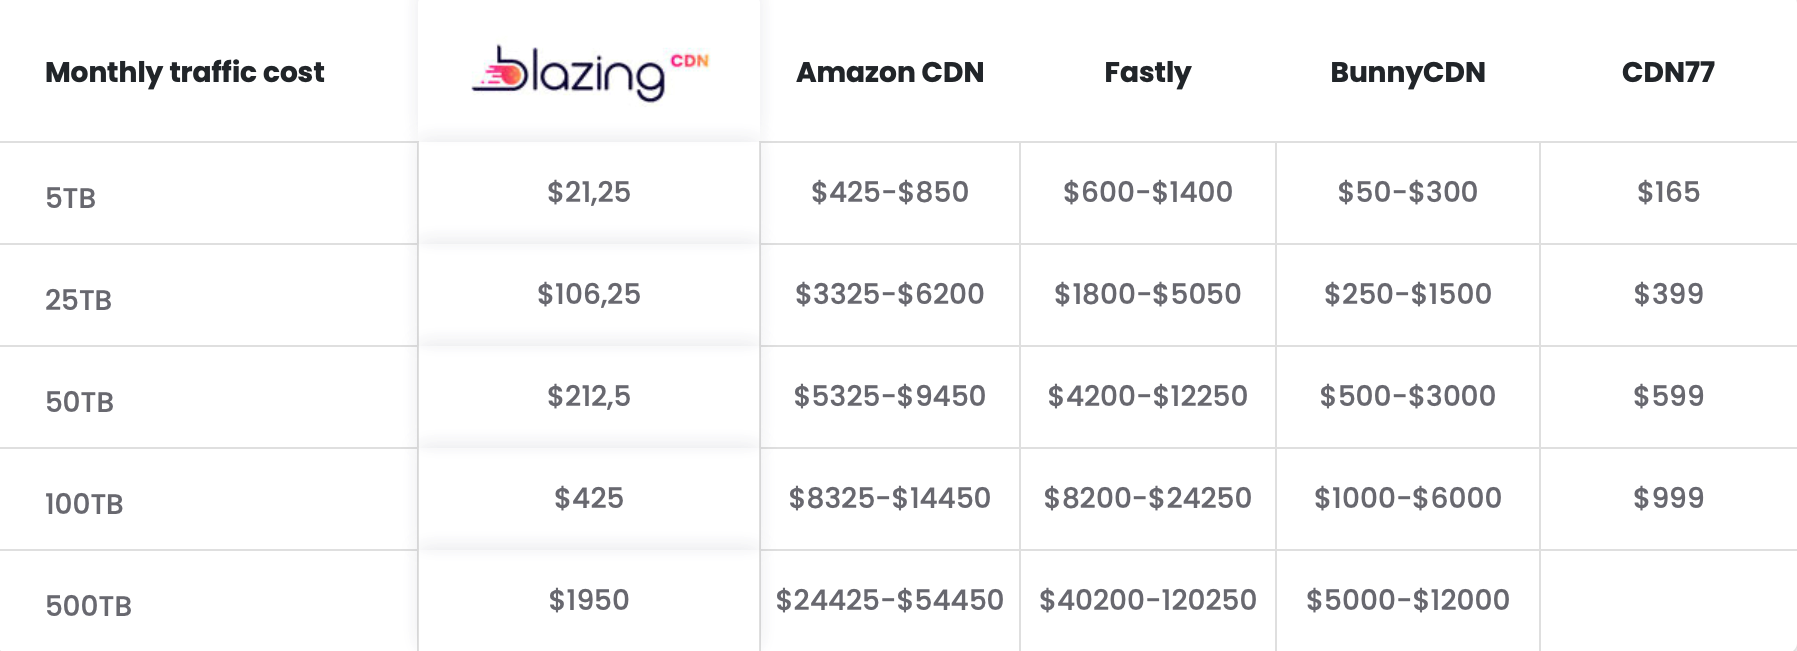 BlazingCDN Price Comparison with Amazon CDN, Fastly, BunnyCDN and CDN77